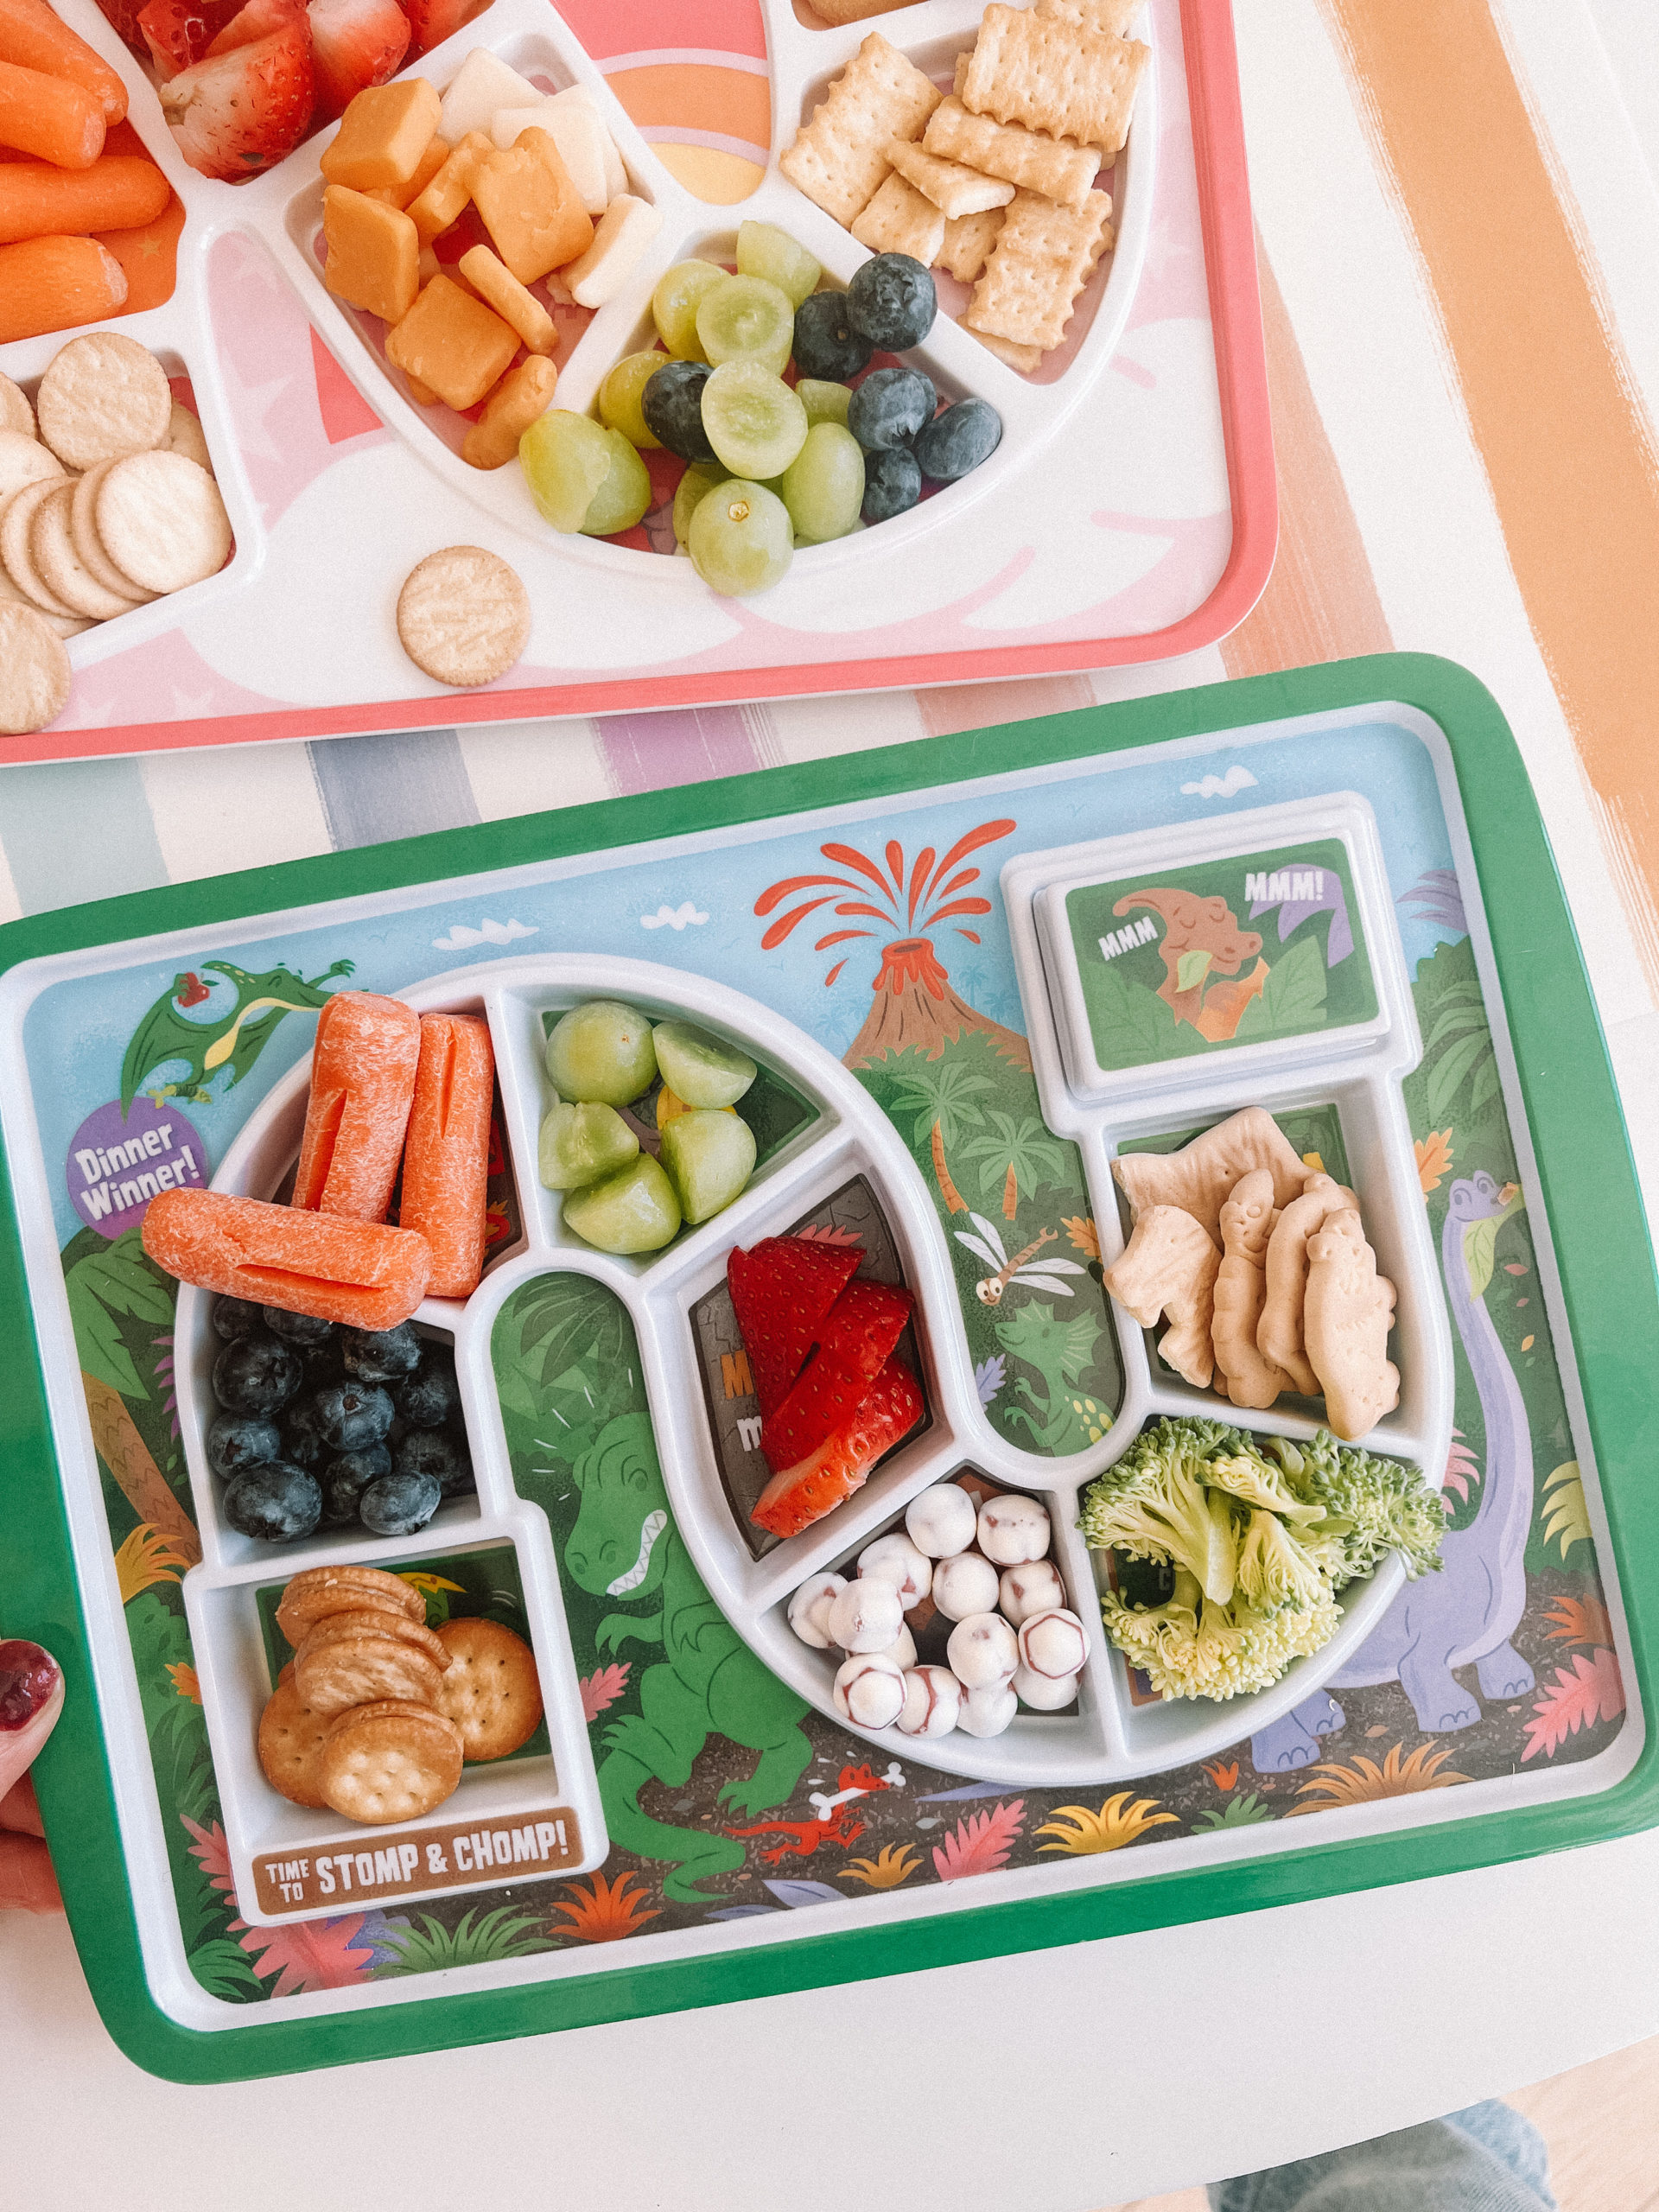 kids' food trays